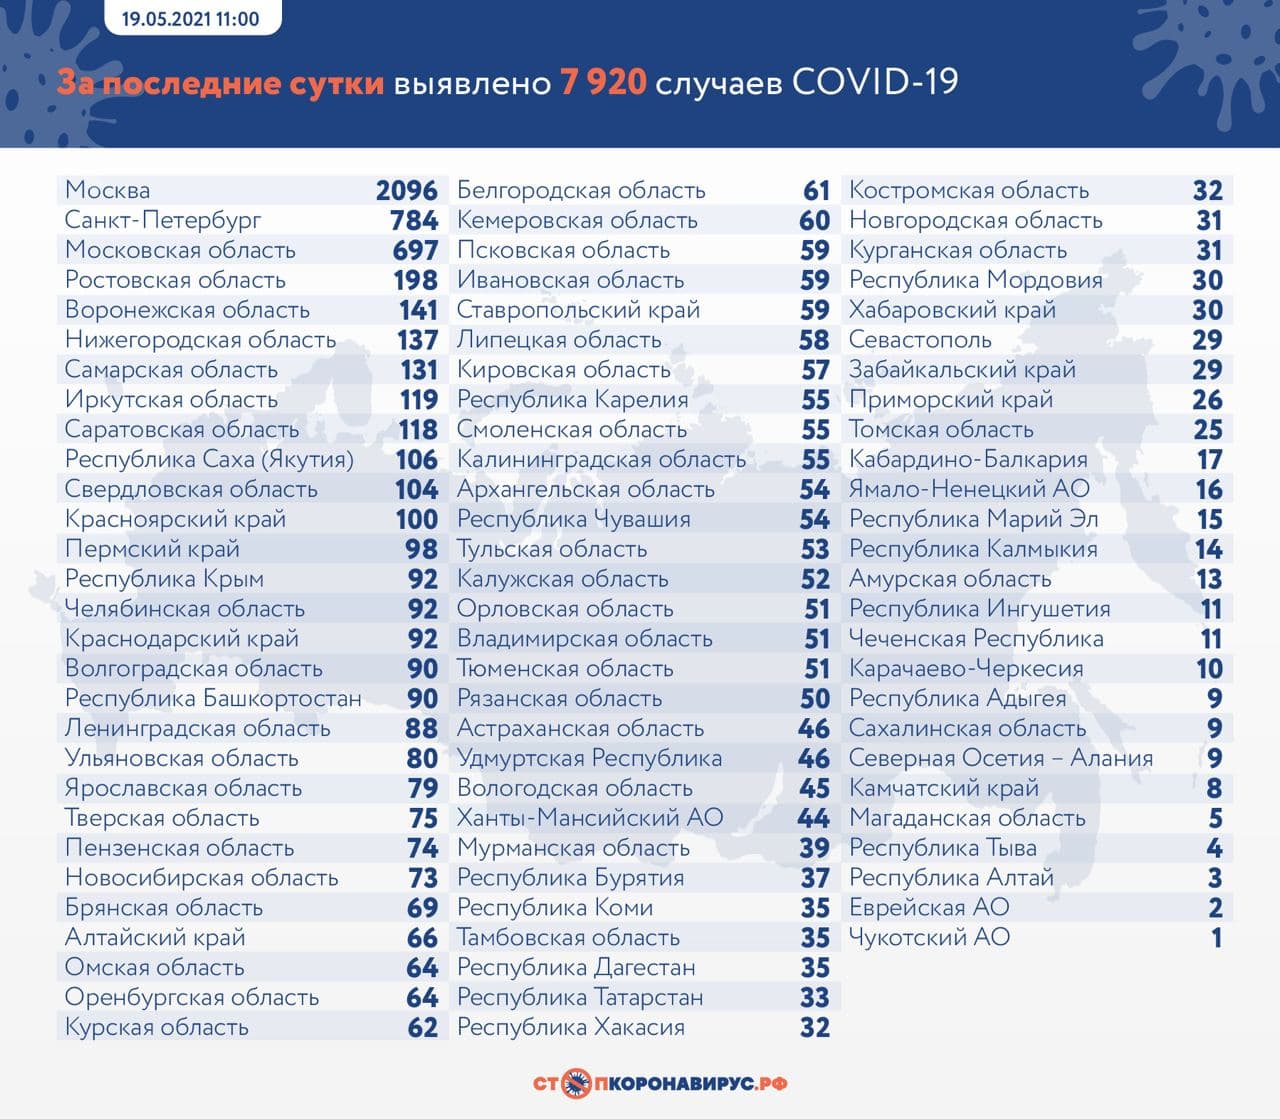 Оперативная статистика по коронавирусу в России на 19 мая